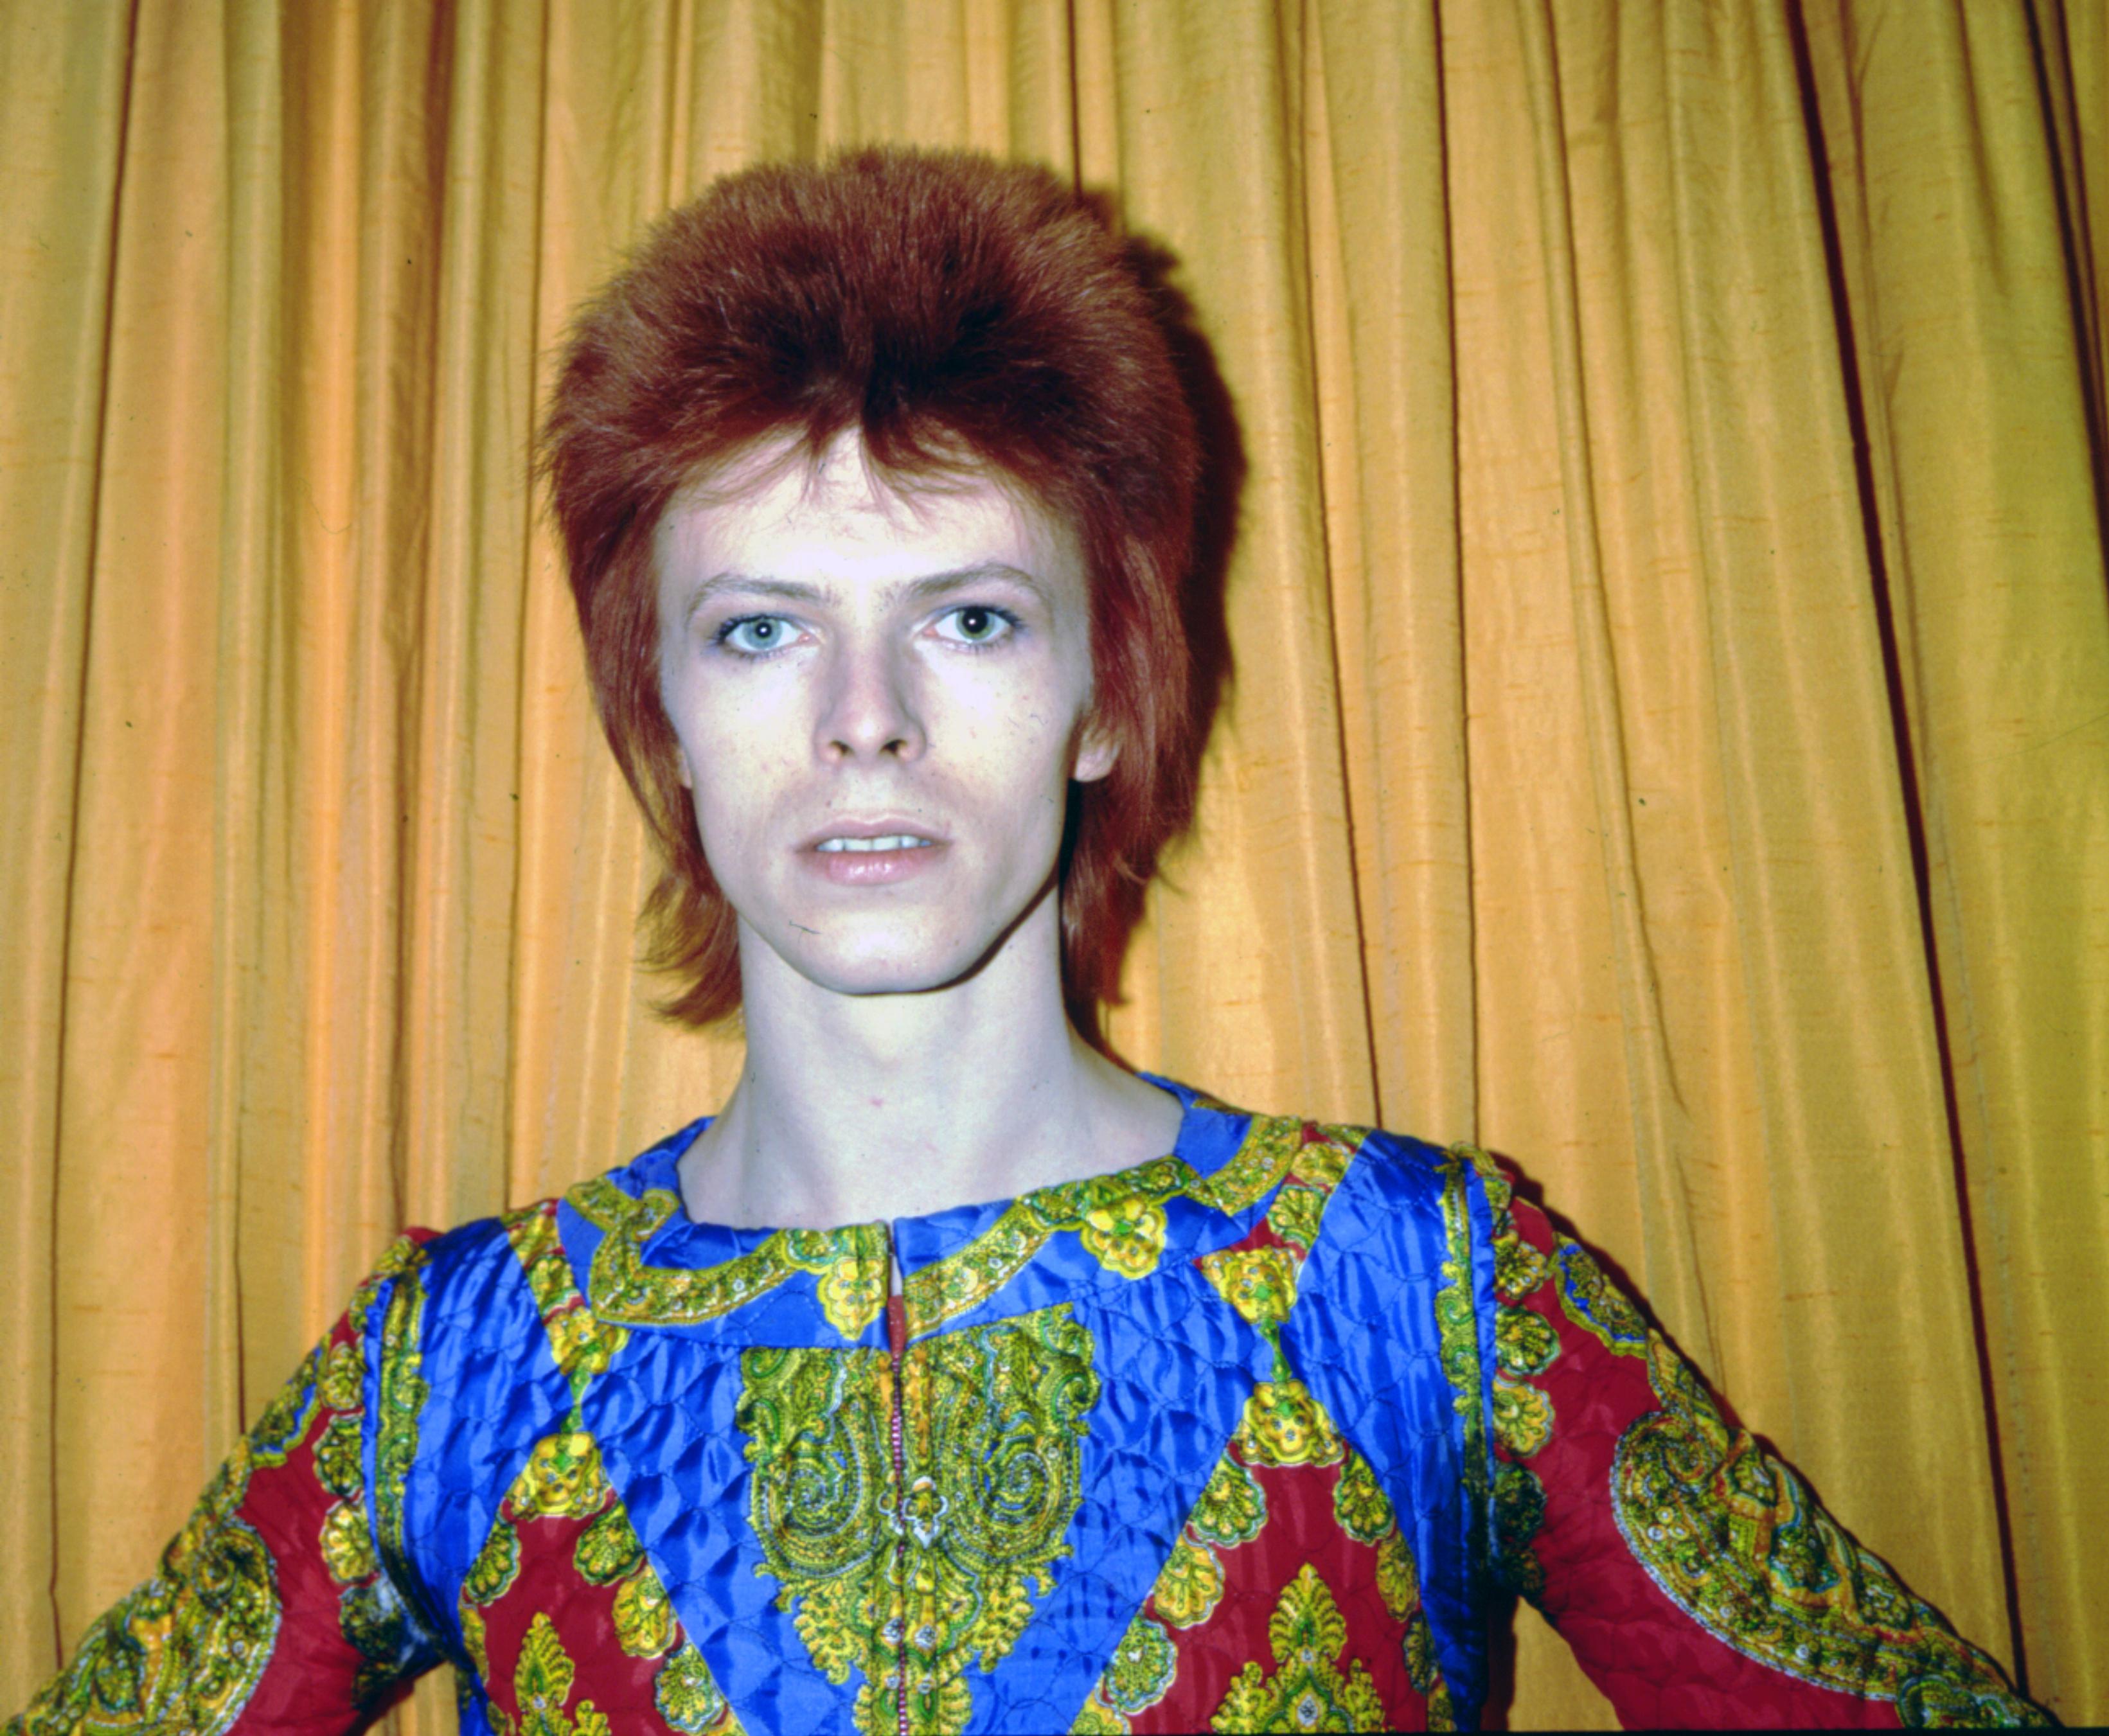 David Bowie performs 'Rebel Rebel' on TopPop